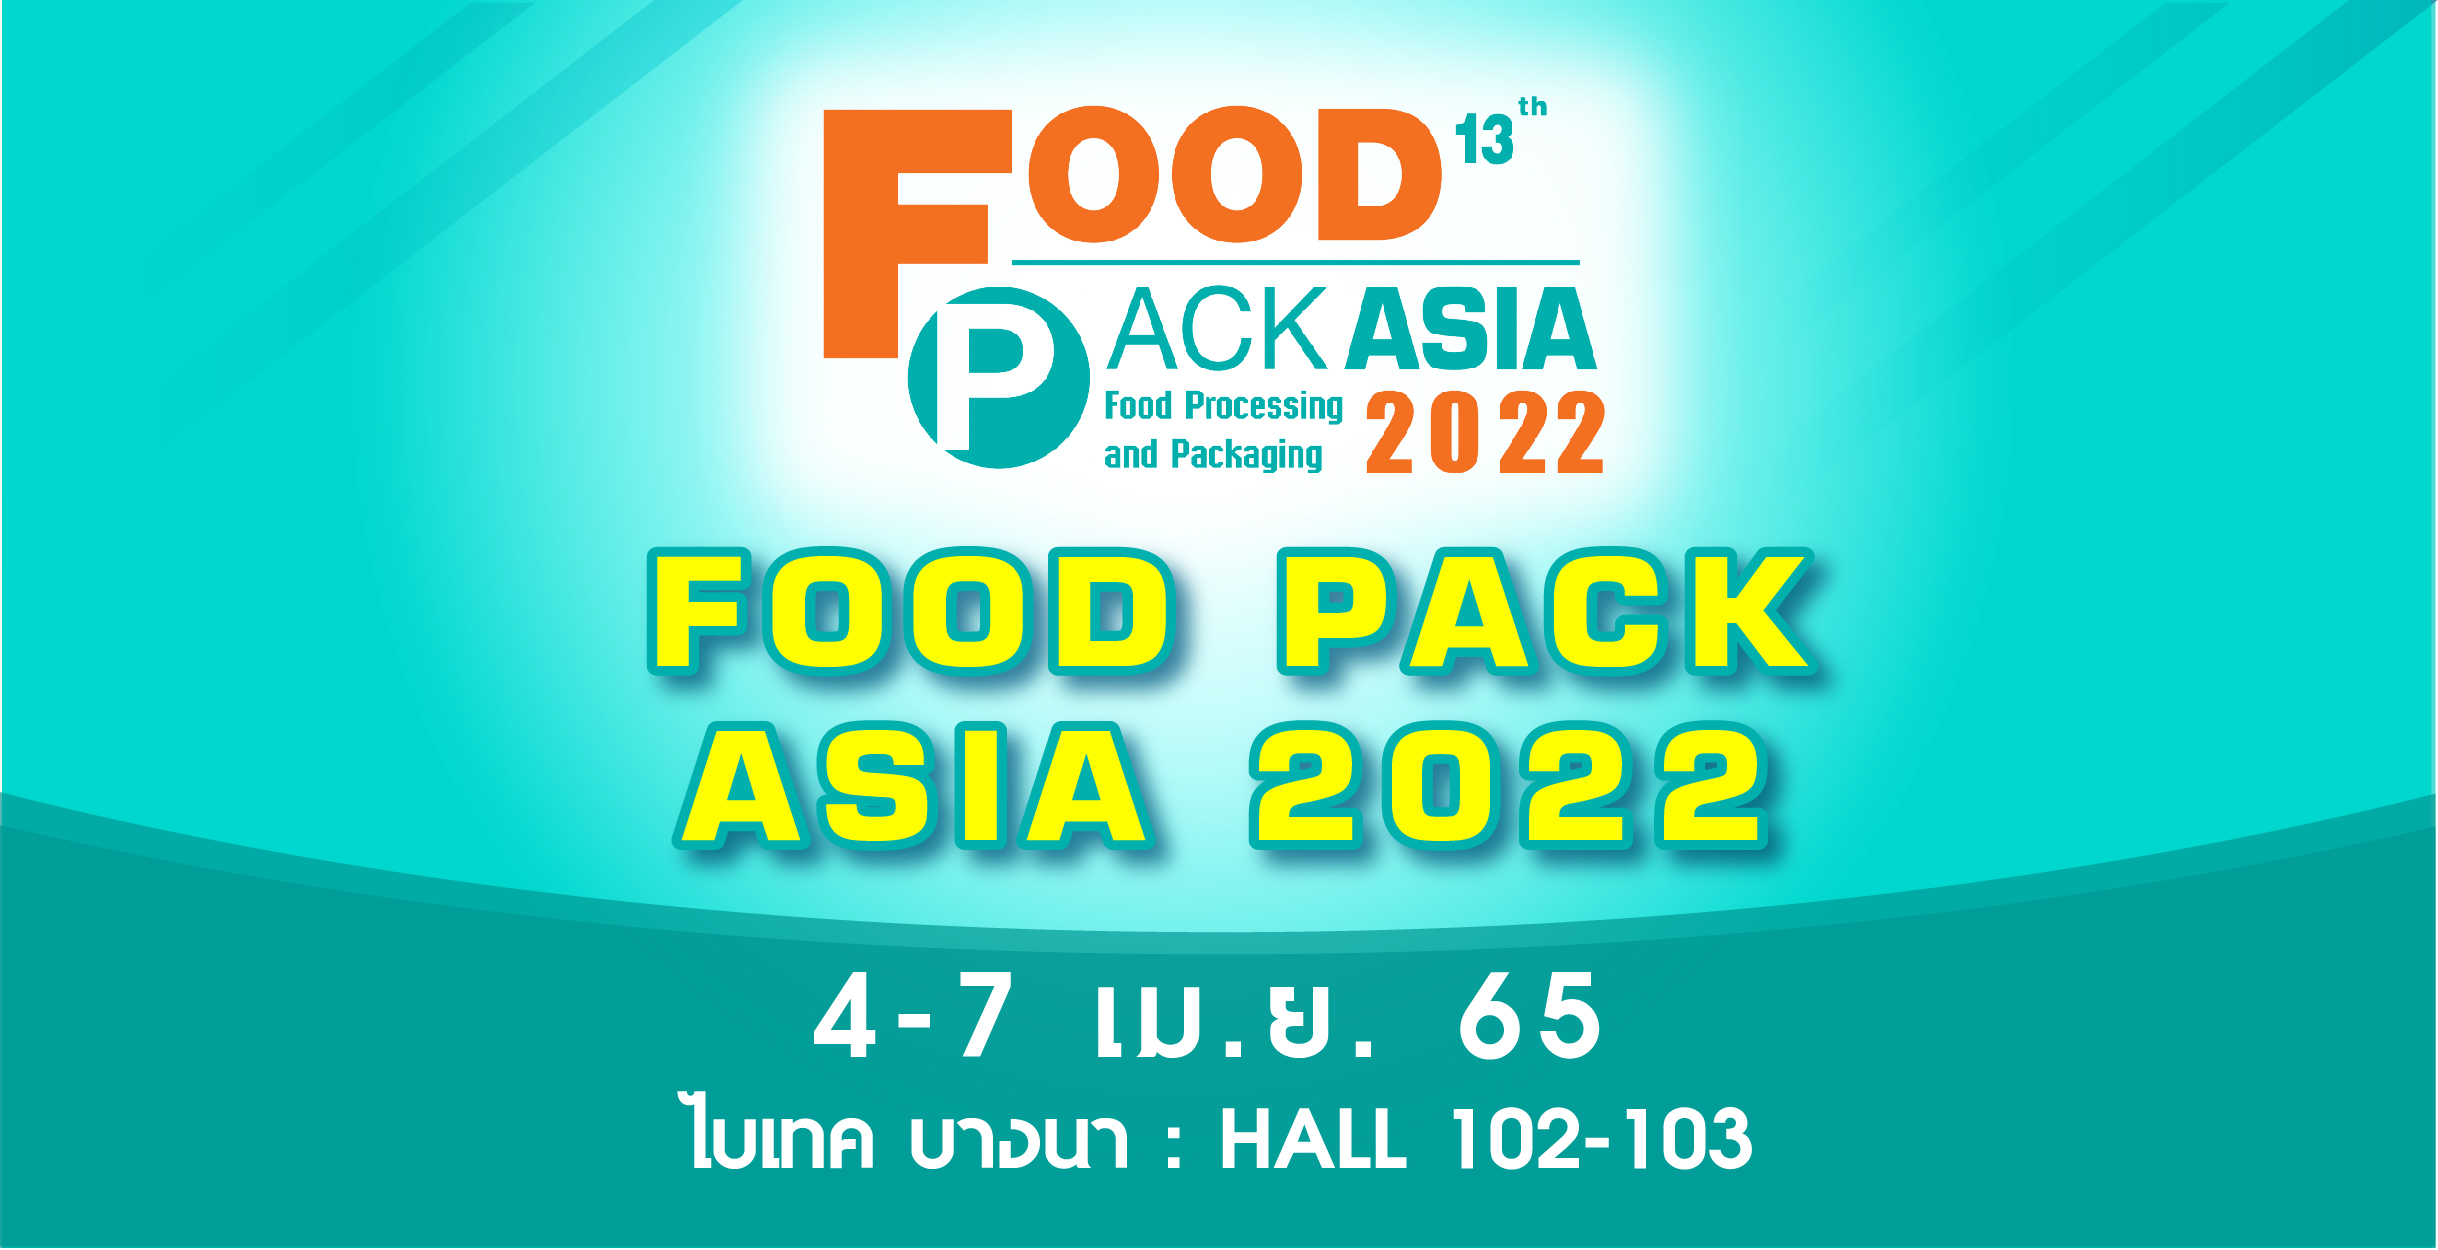 Food Pack Asia 2022 - Bangkok International Trade & Exhibition Centre